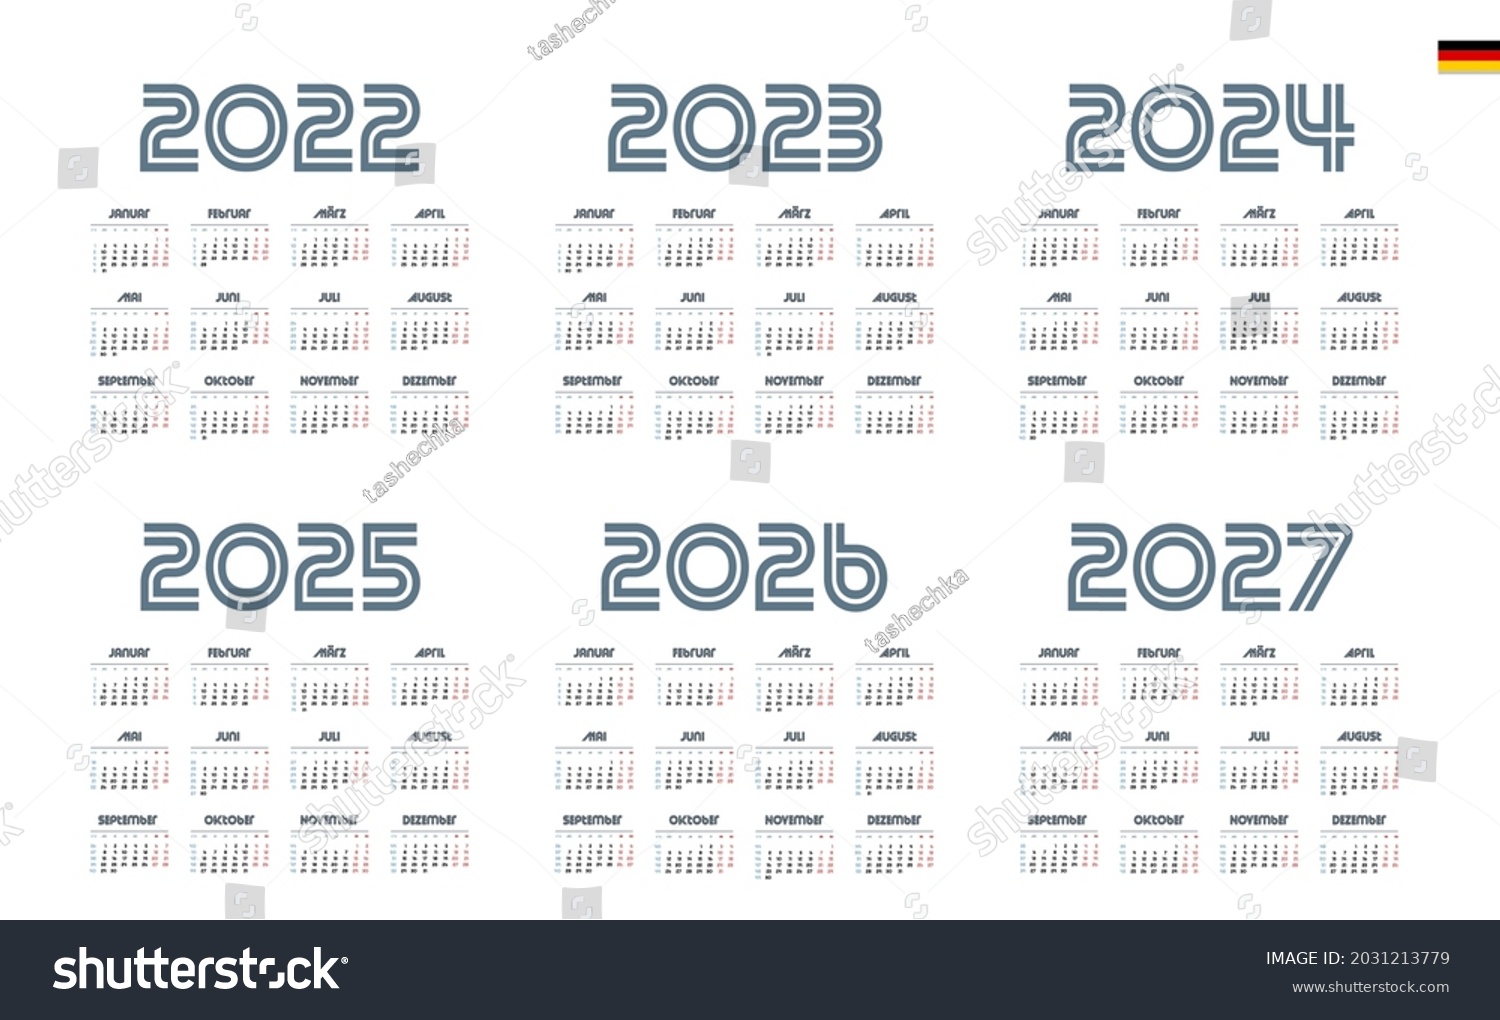 german-calendar-2022-2023-2024-2025-stock-vector-royalty-free-2031213779-shutterstock